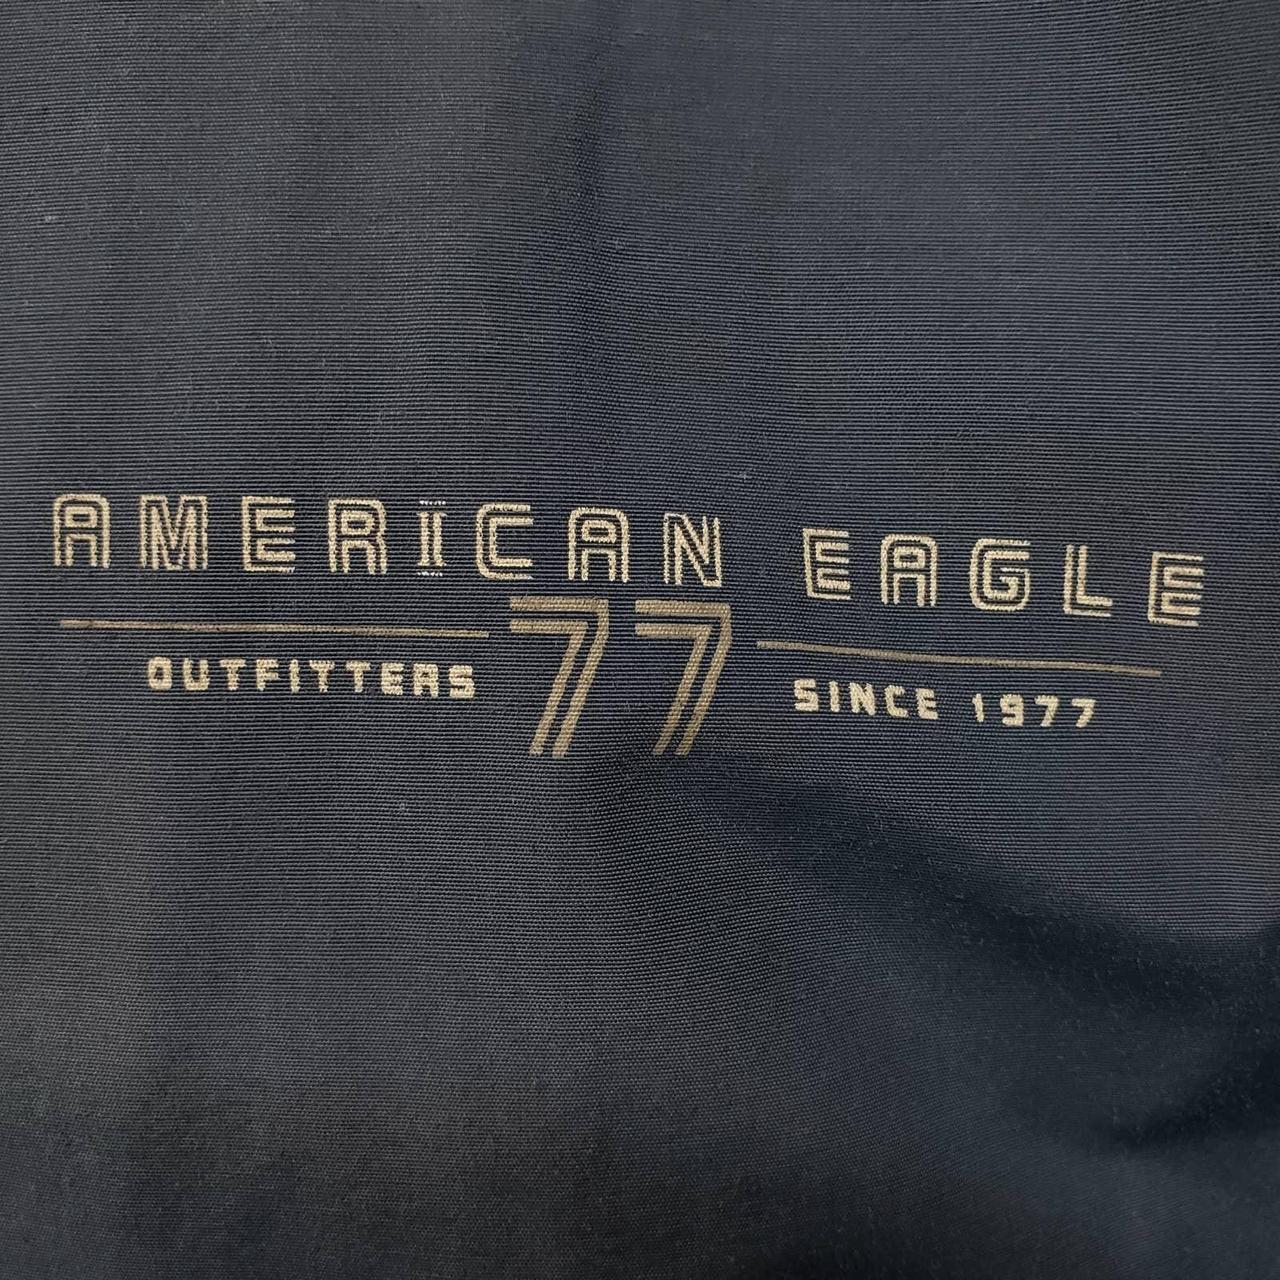 Qoo10 - American Eagle Men's Parka AE Vintage Signature Full-Zip Hoodie  (9 : Men's Clothing